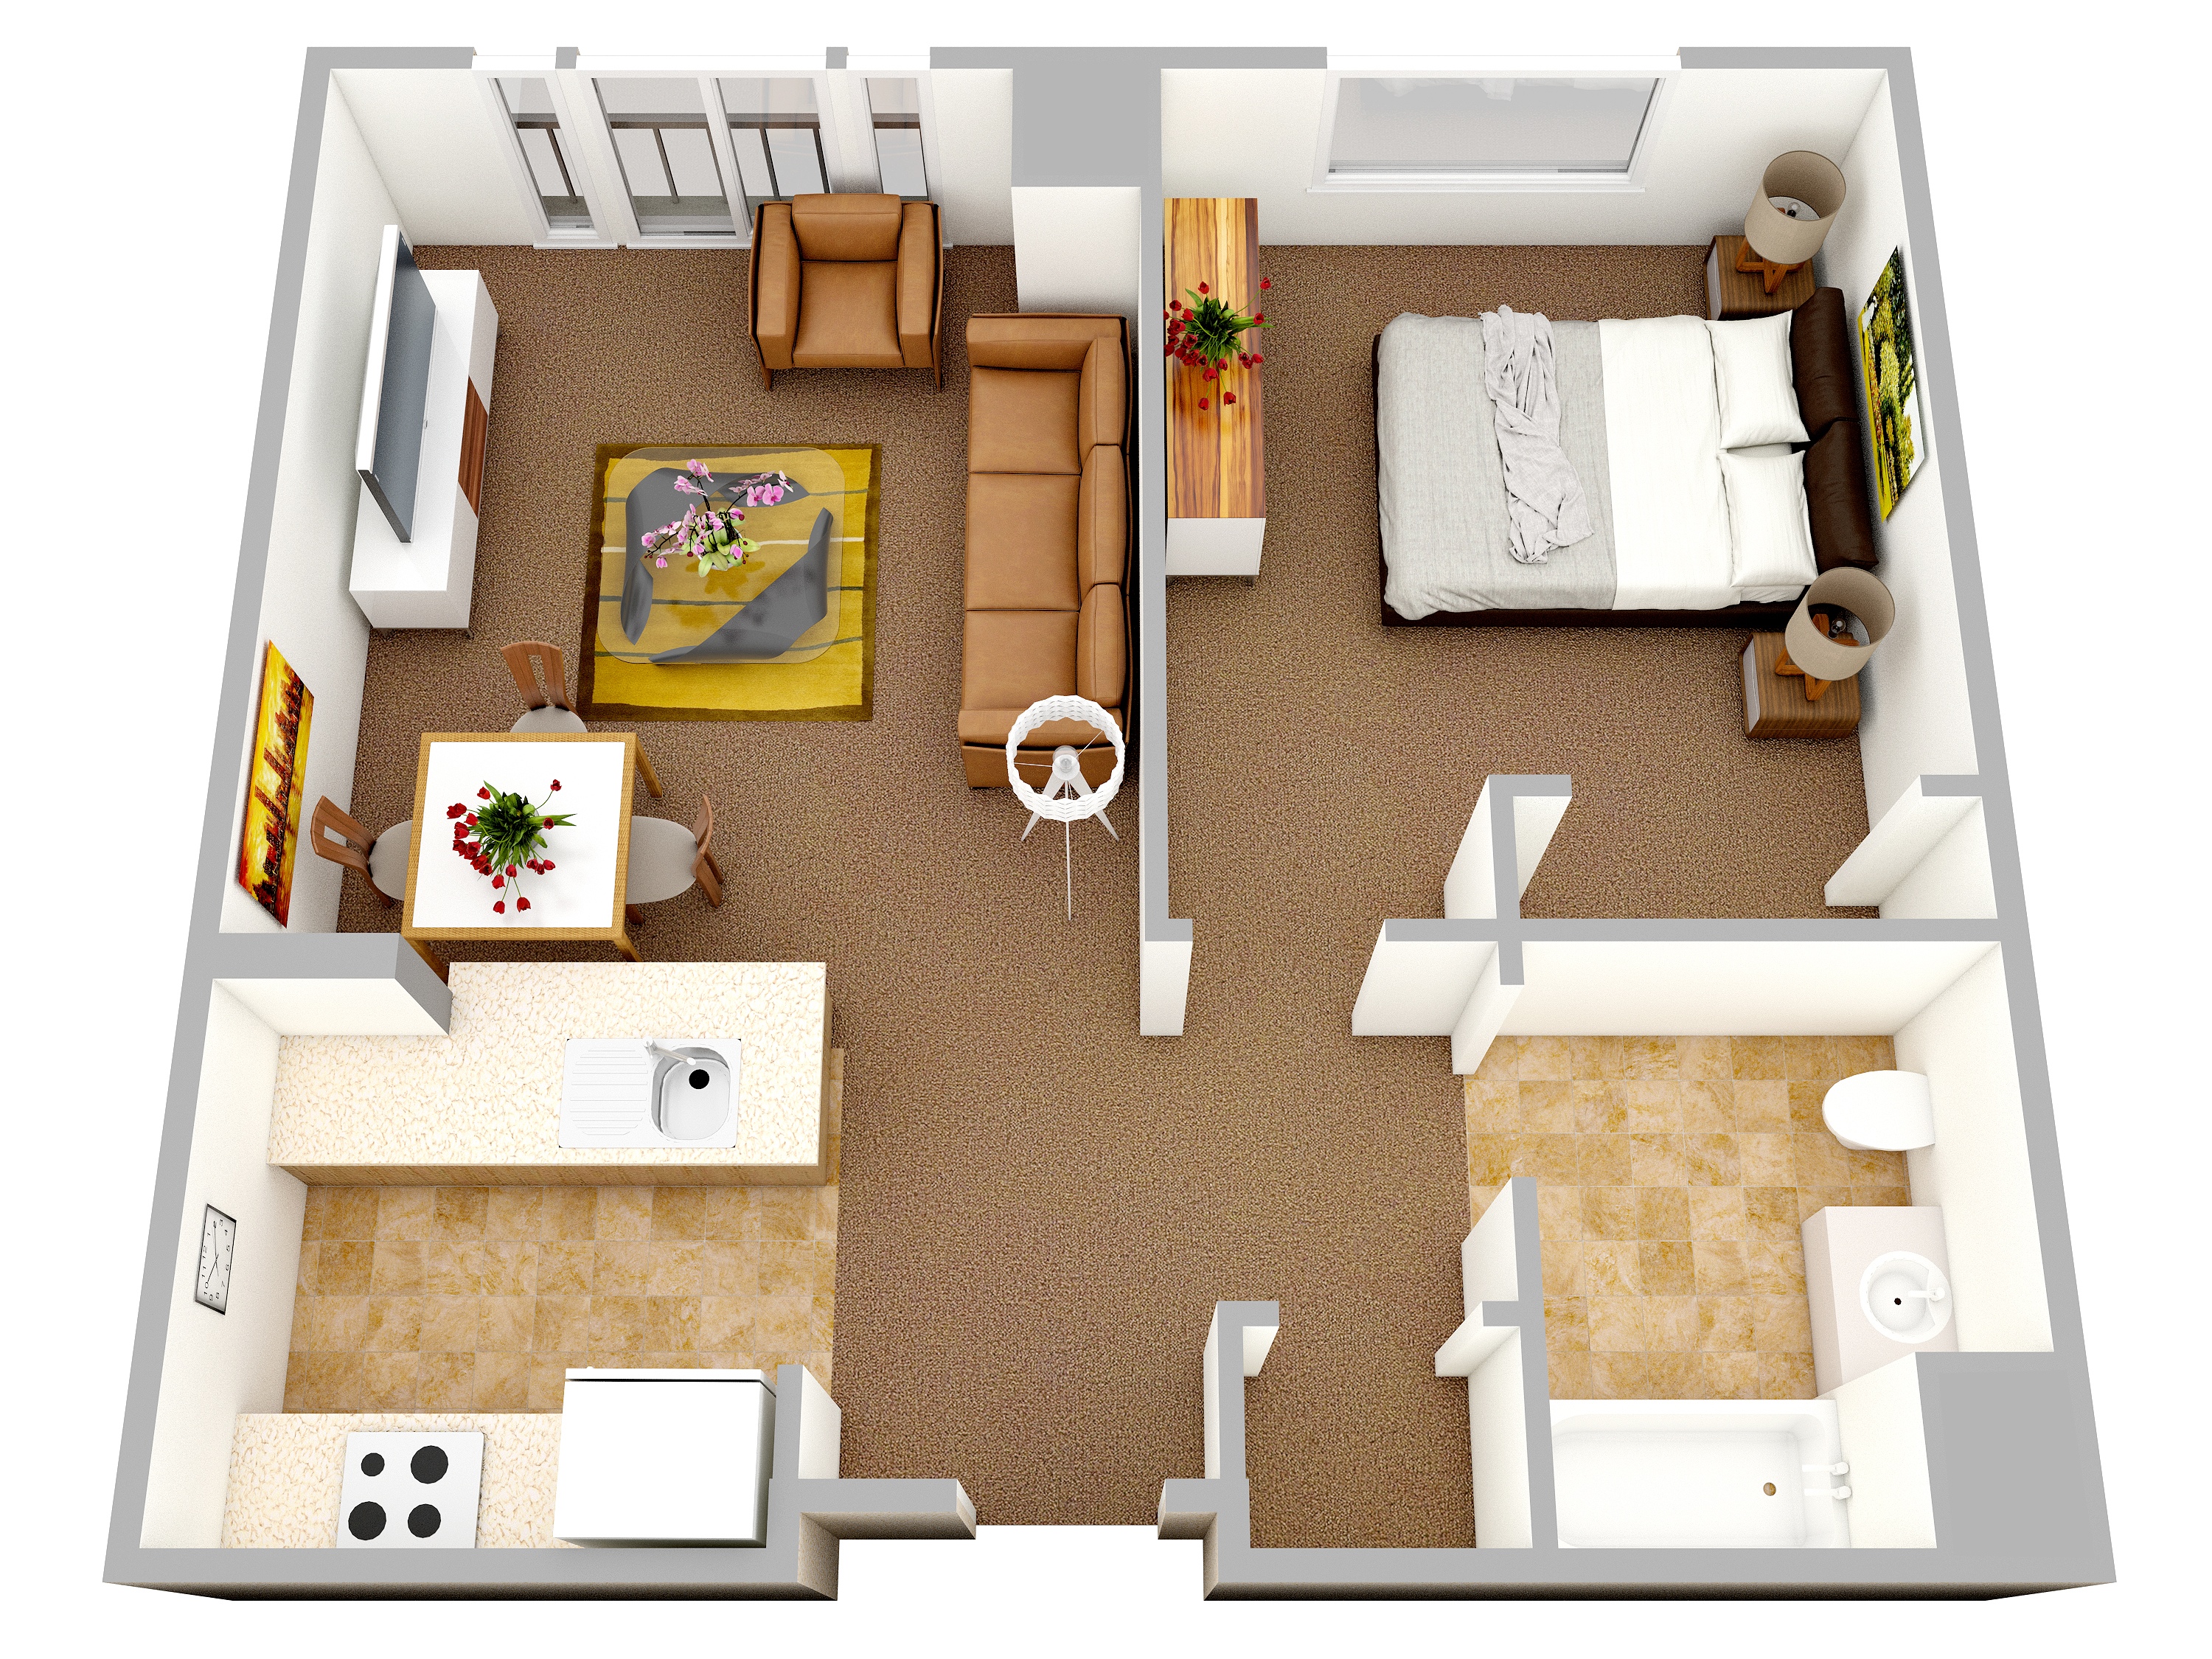 1 Bedroom Apartment/House Plans smiuchin